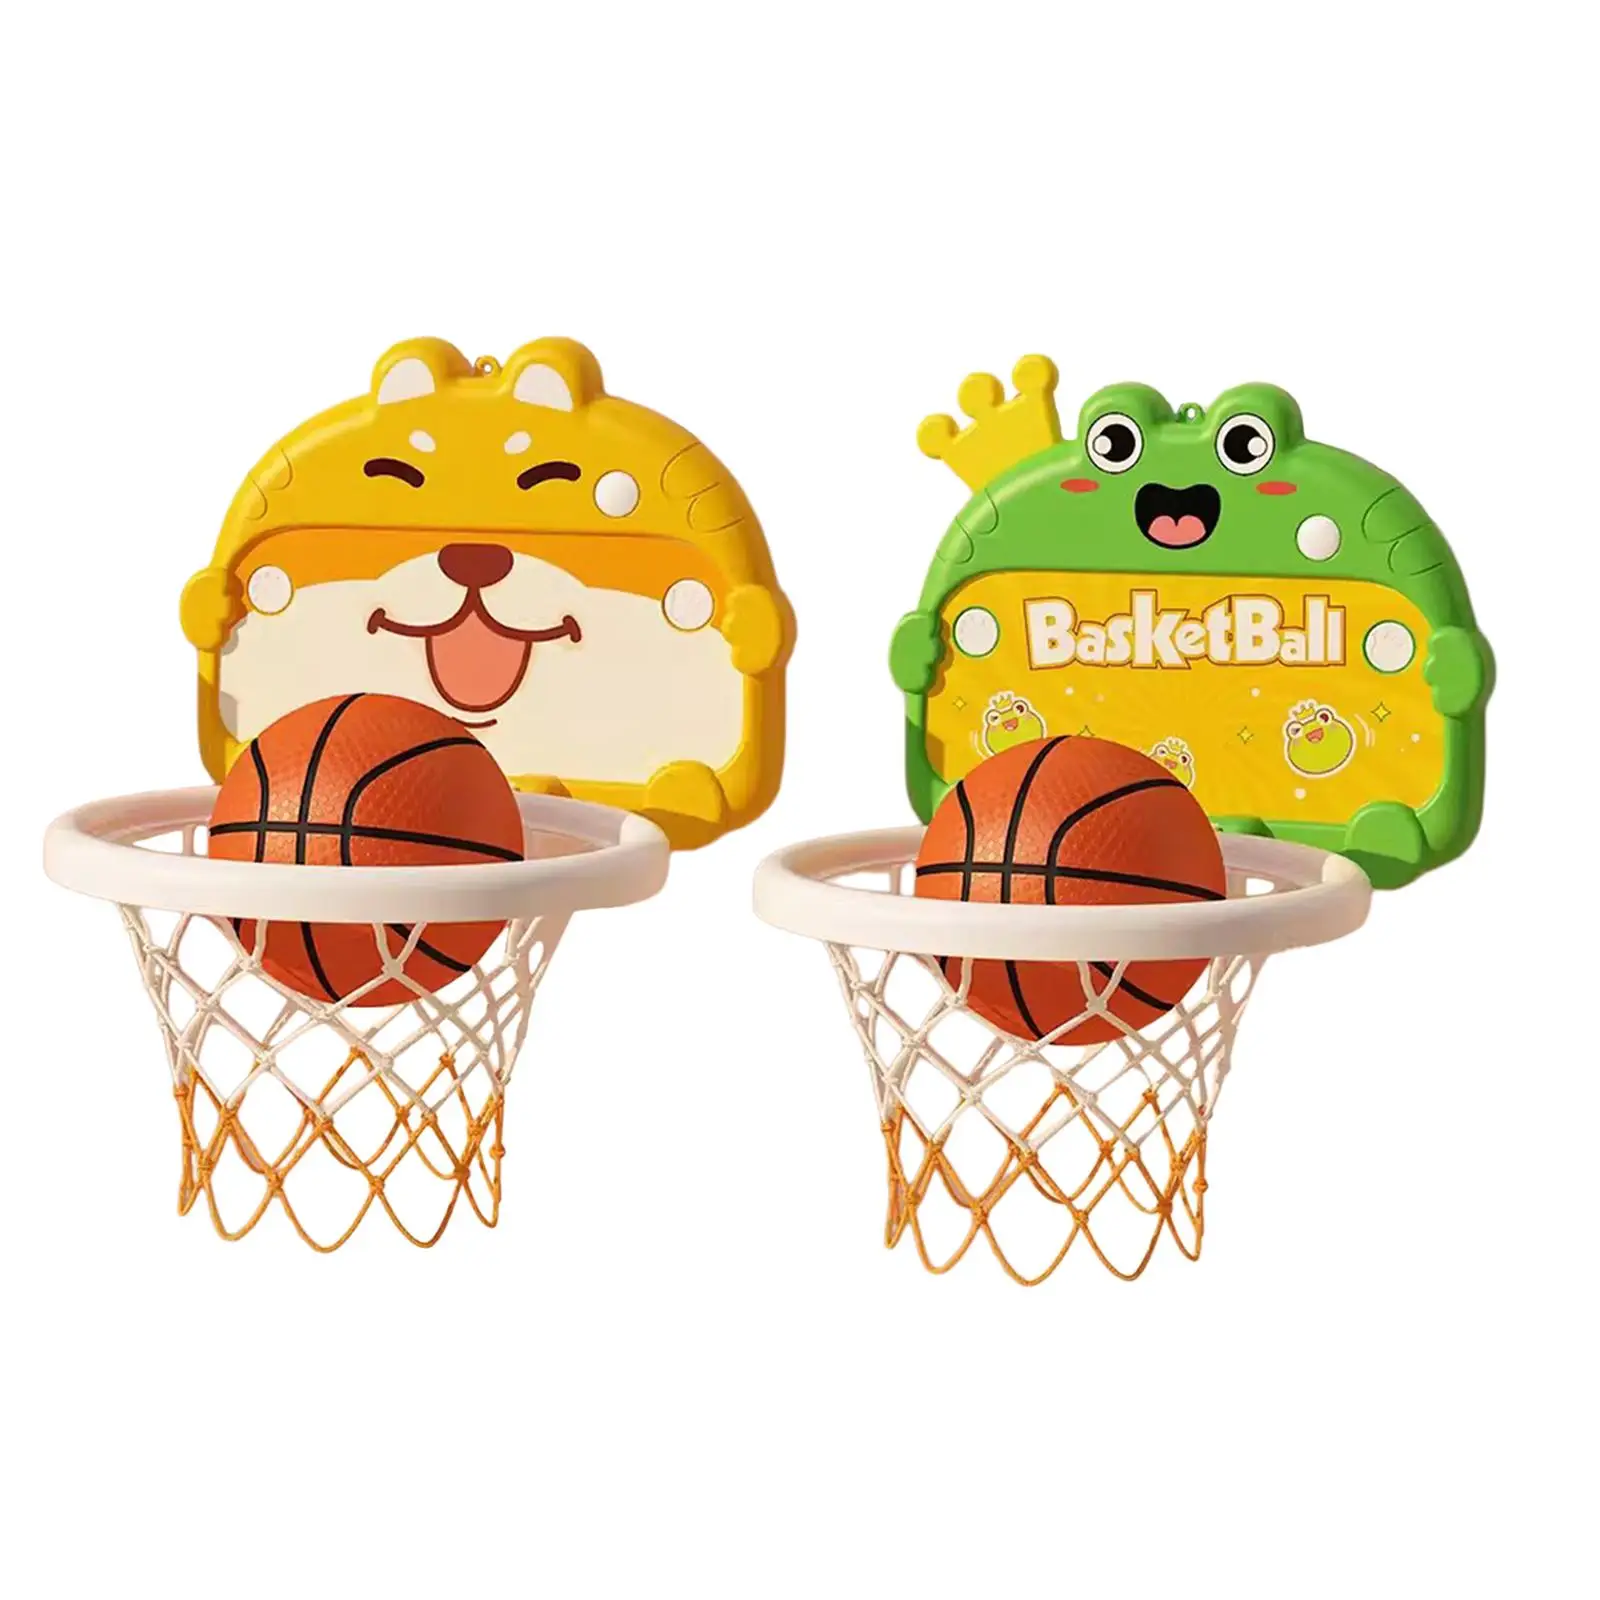 Mini Basketball Hoop Set Family Games Activity Centers, Educational Basketball